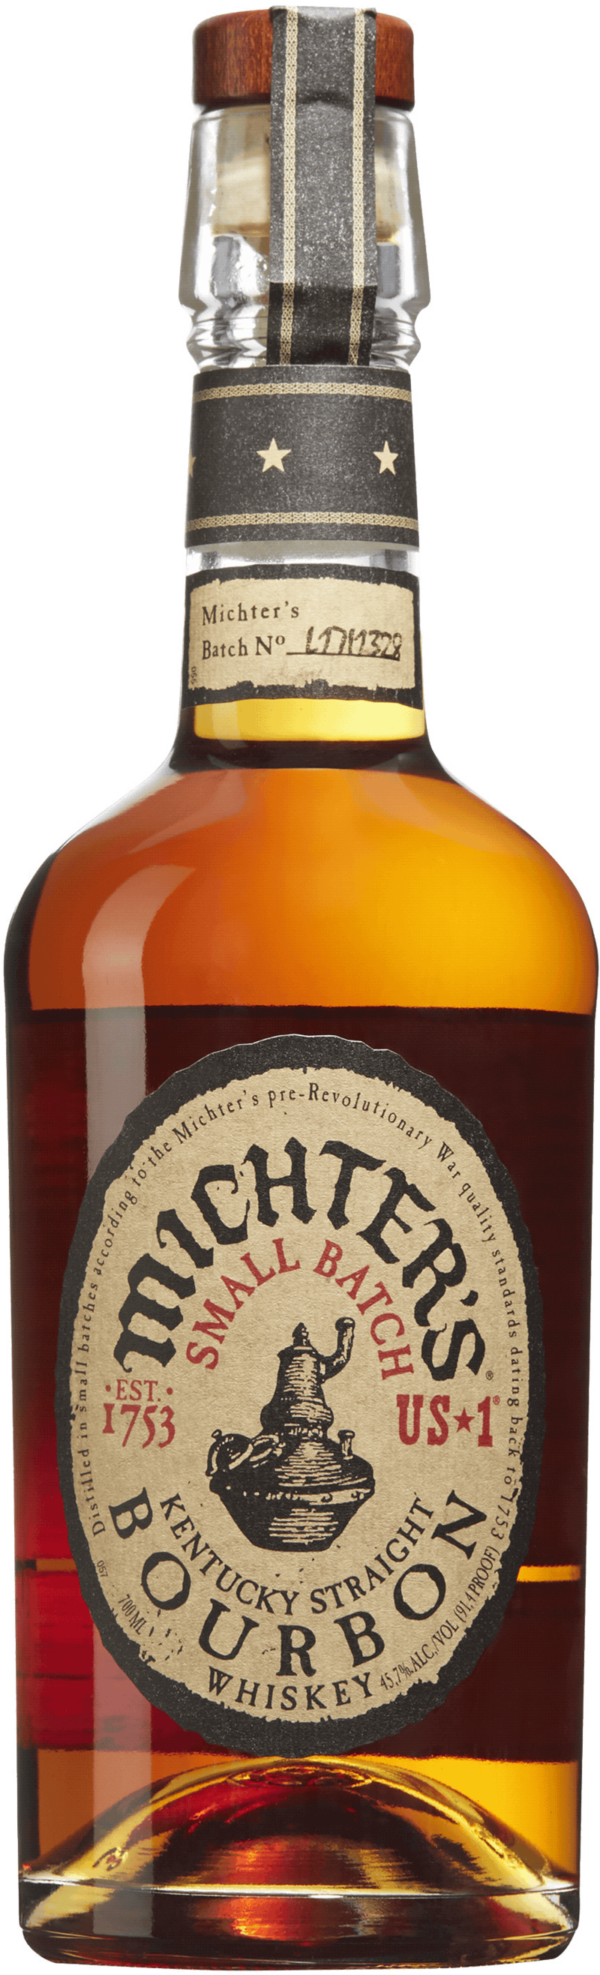 Michter's US*1 Kentucky Straight Bourbon. En Whisky av typen Bourbon i en 700 Flaska från Kentucky